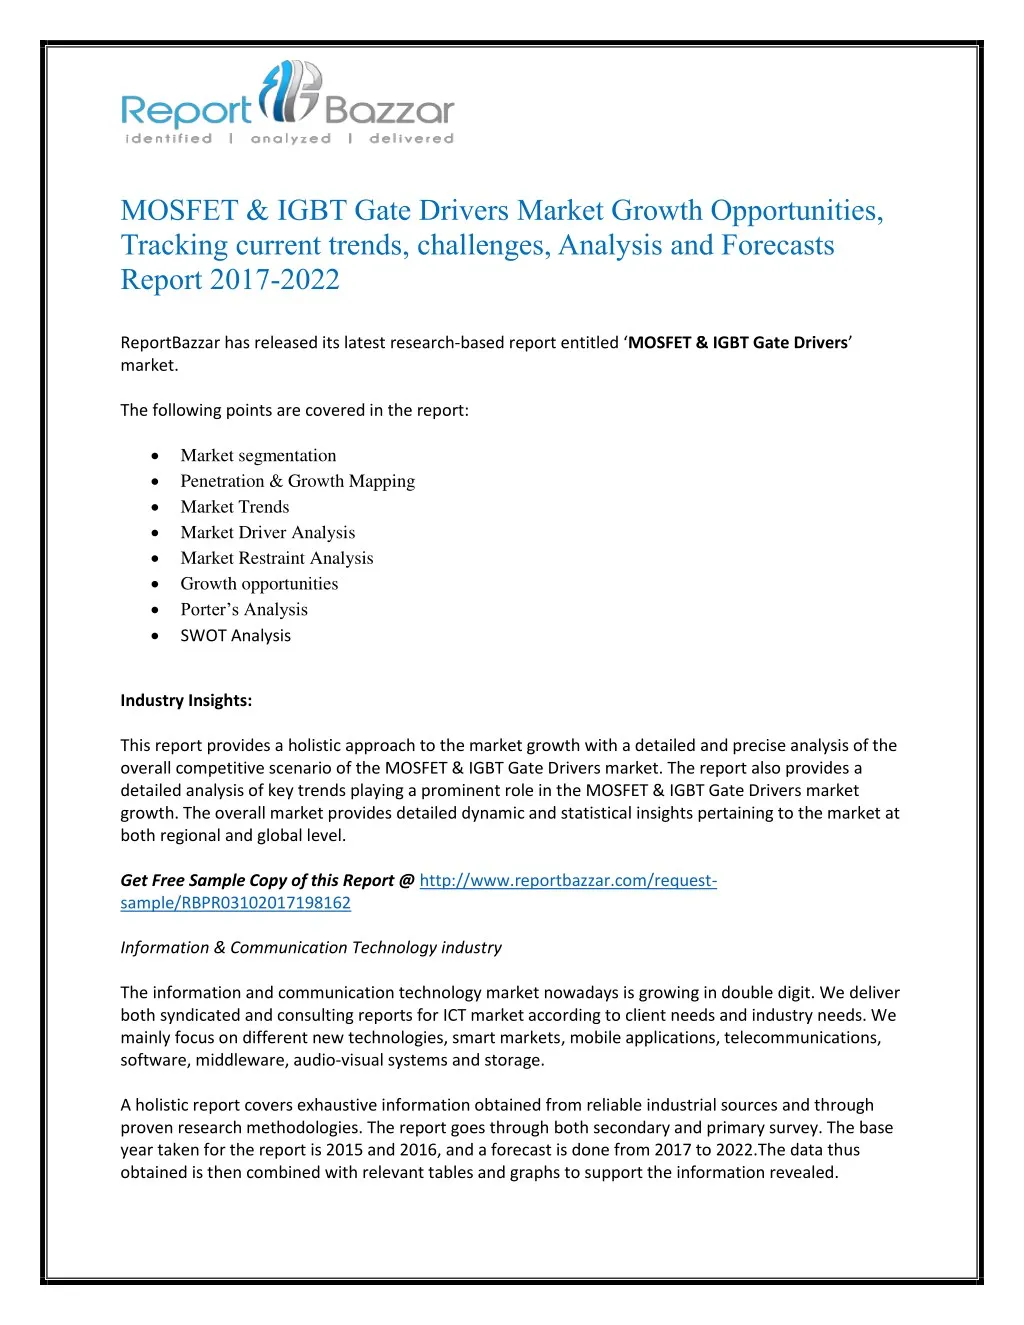 mosfet igbt gate drivers market growth